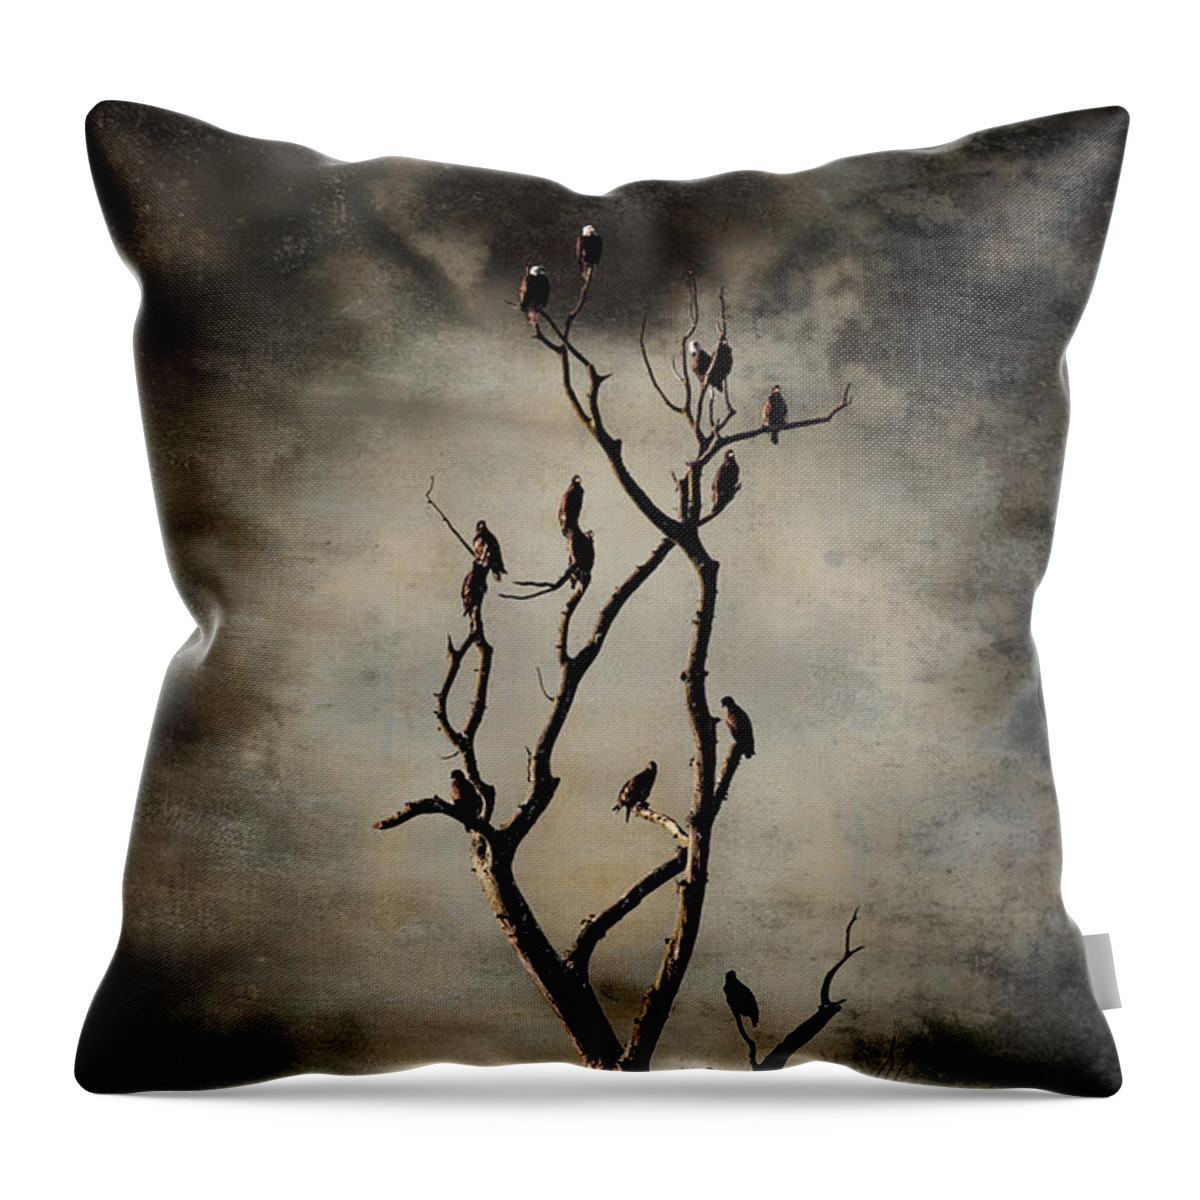 Alaskan Eagle Throw Pillow featuring the digital art The Spirit Tree by Manpreet Sokhi